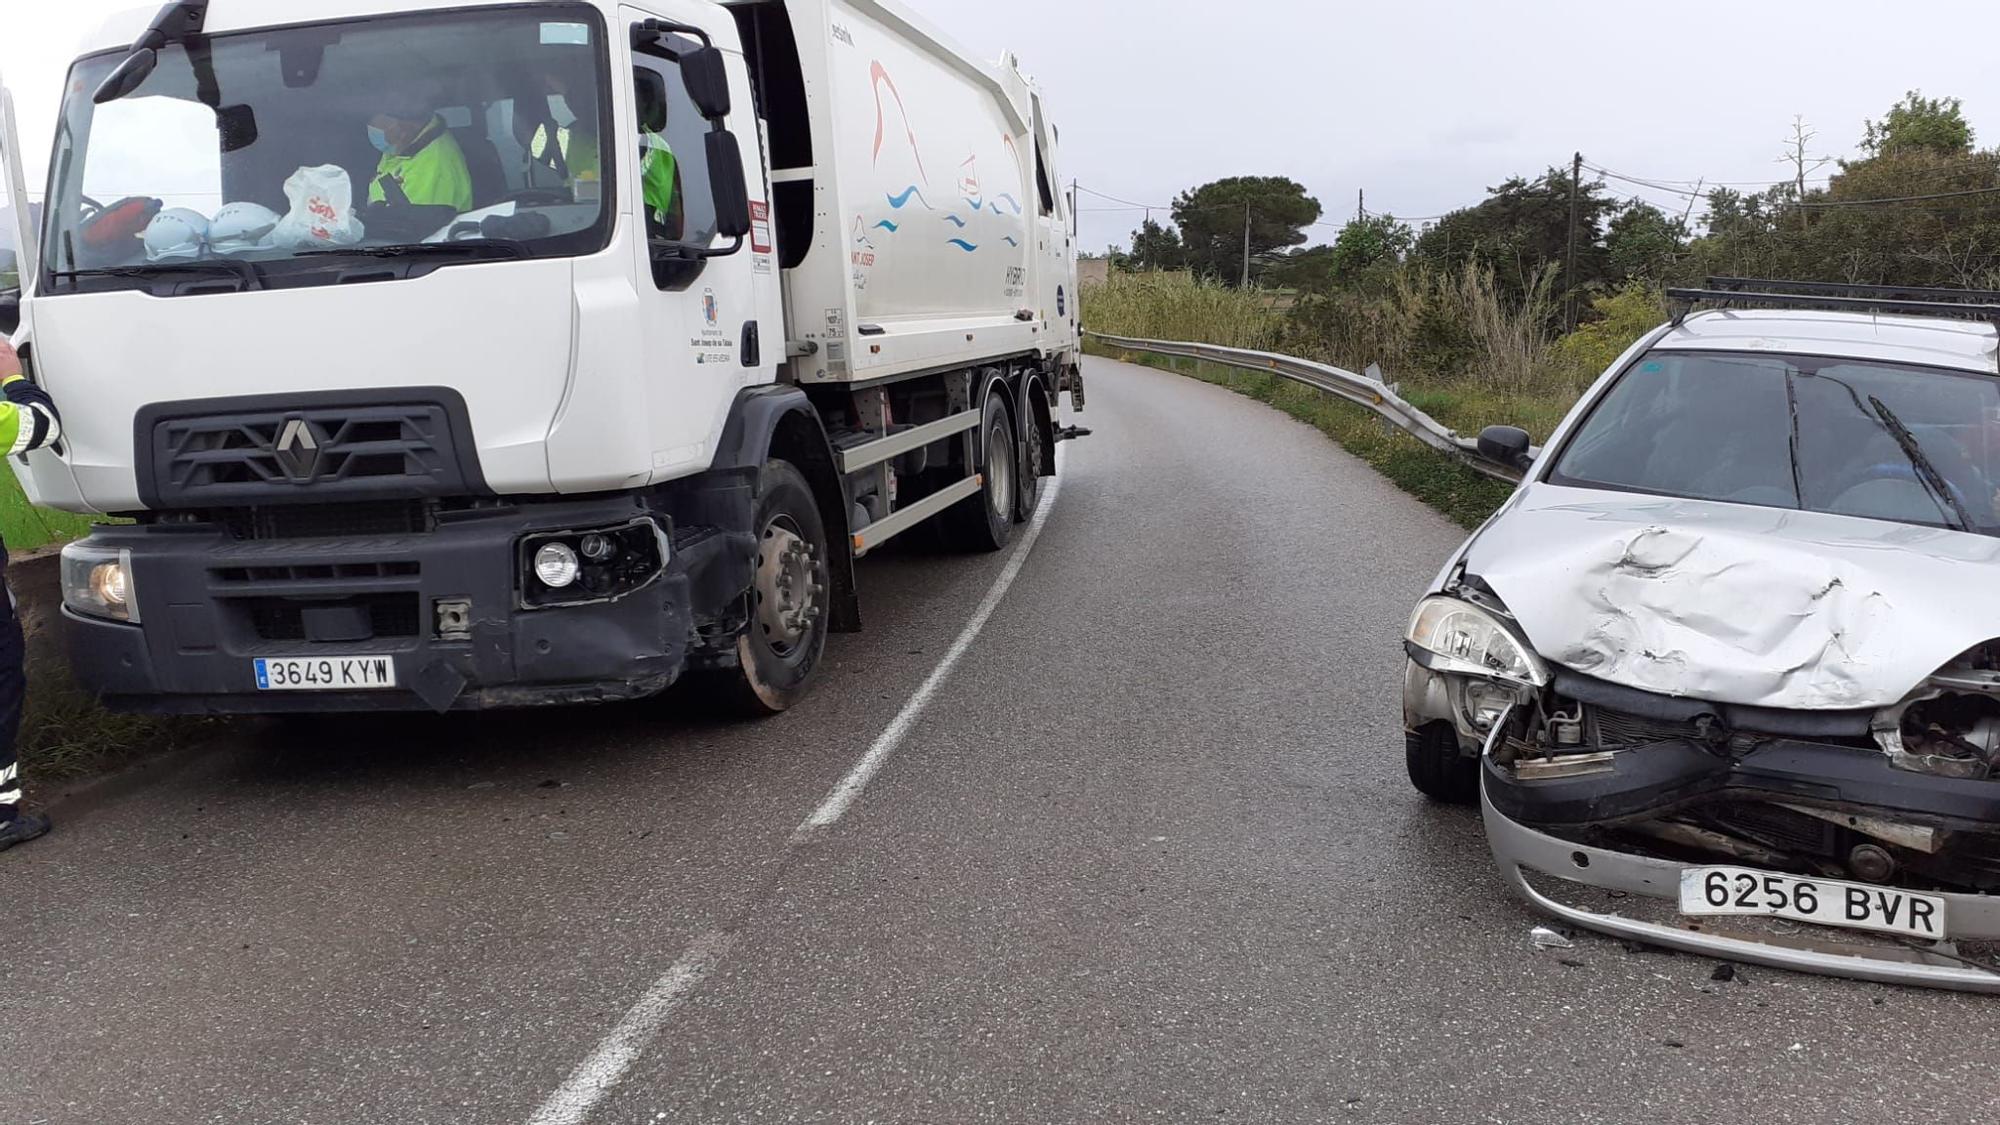 Día de accidentes en Ibiza a causa de la lluvia